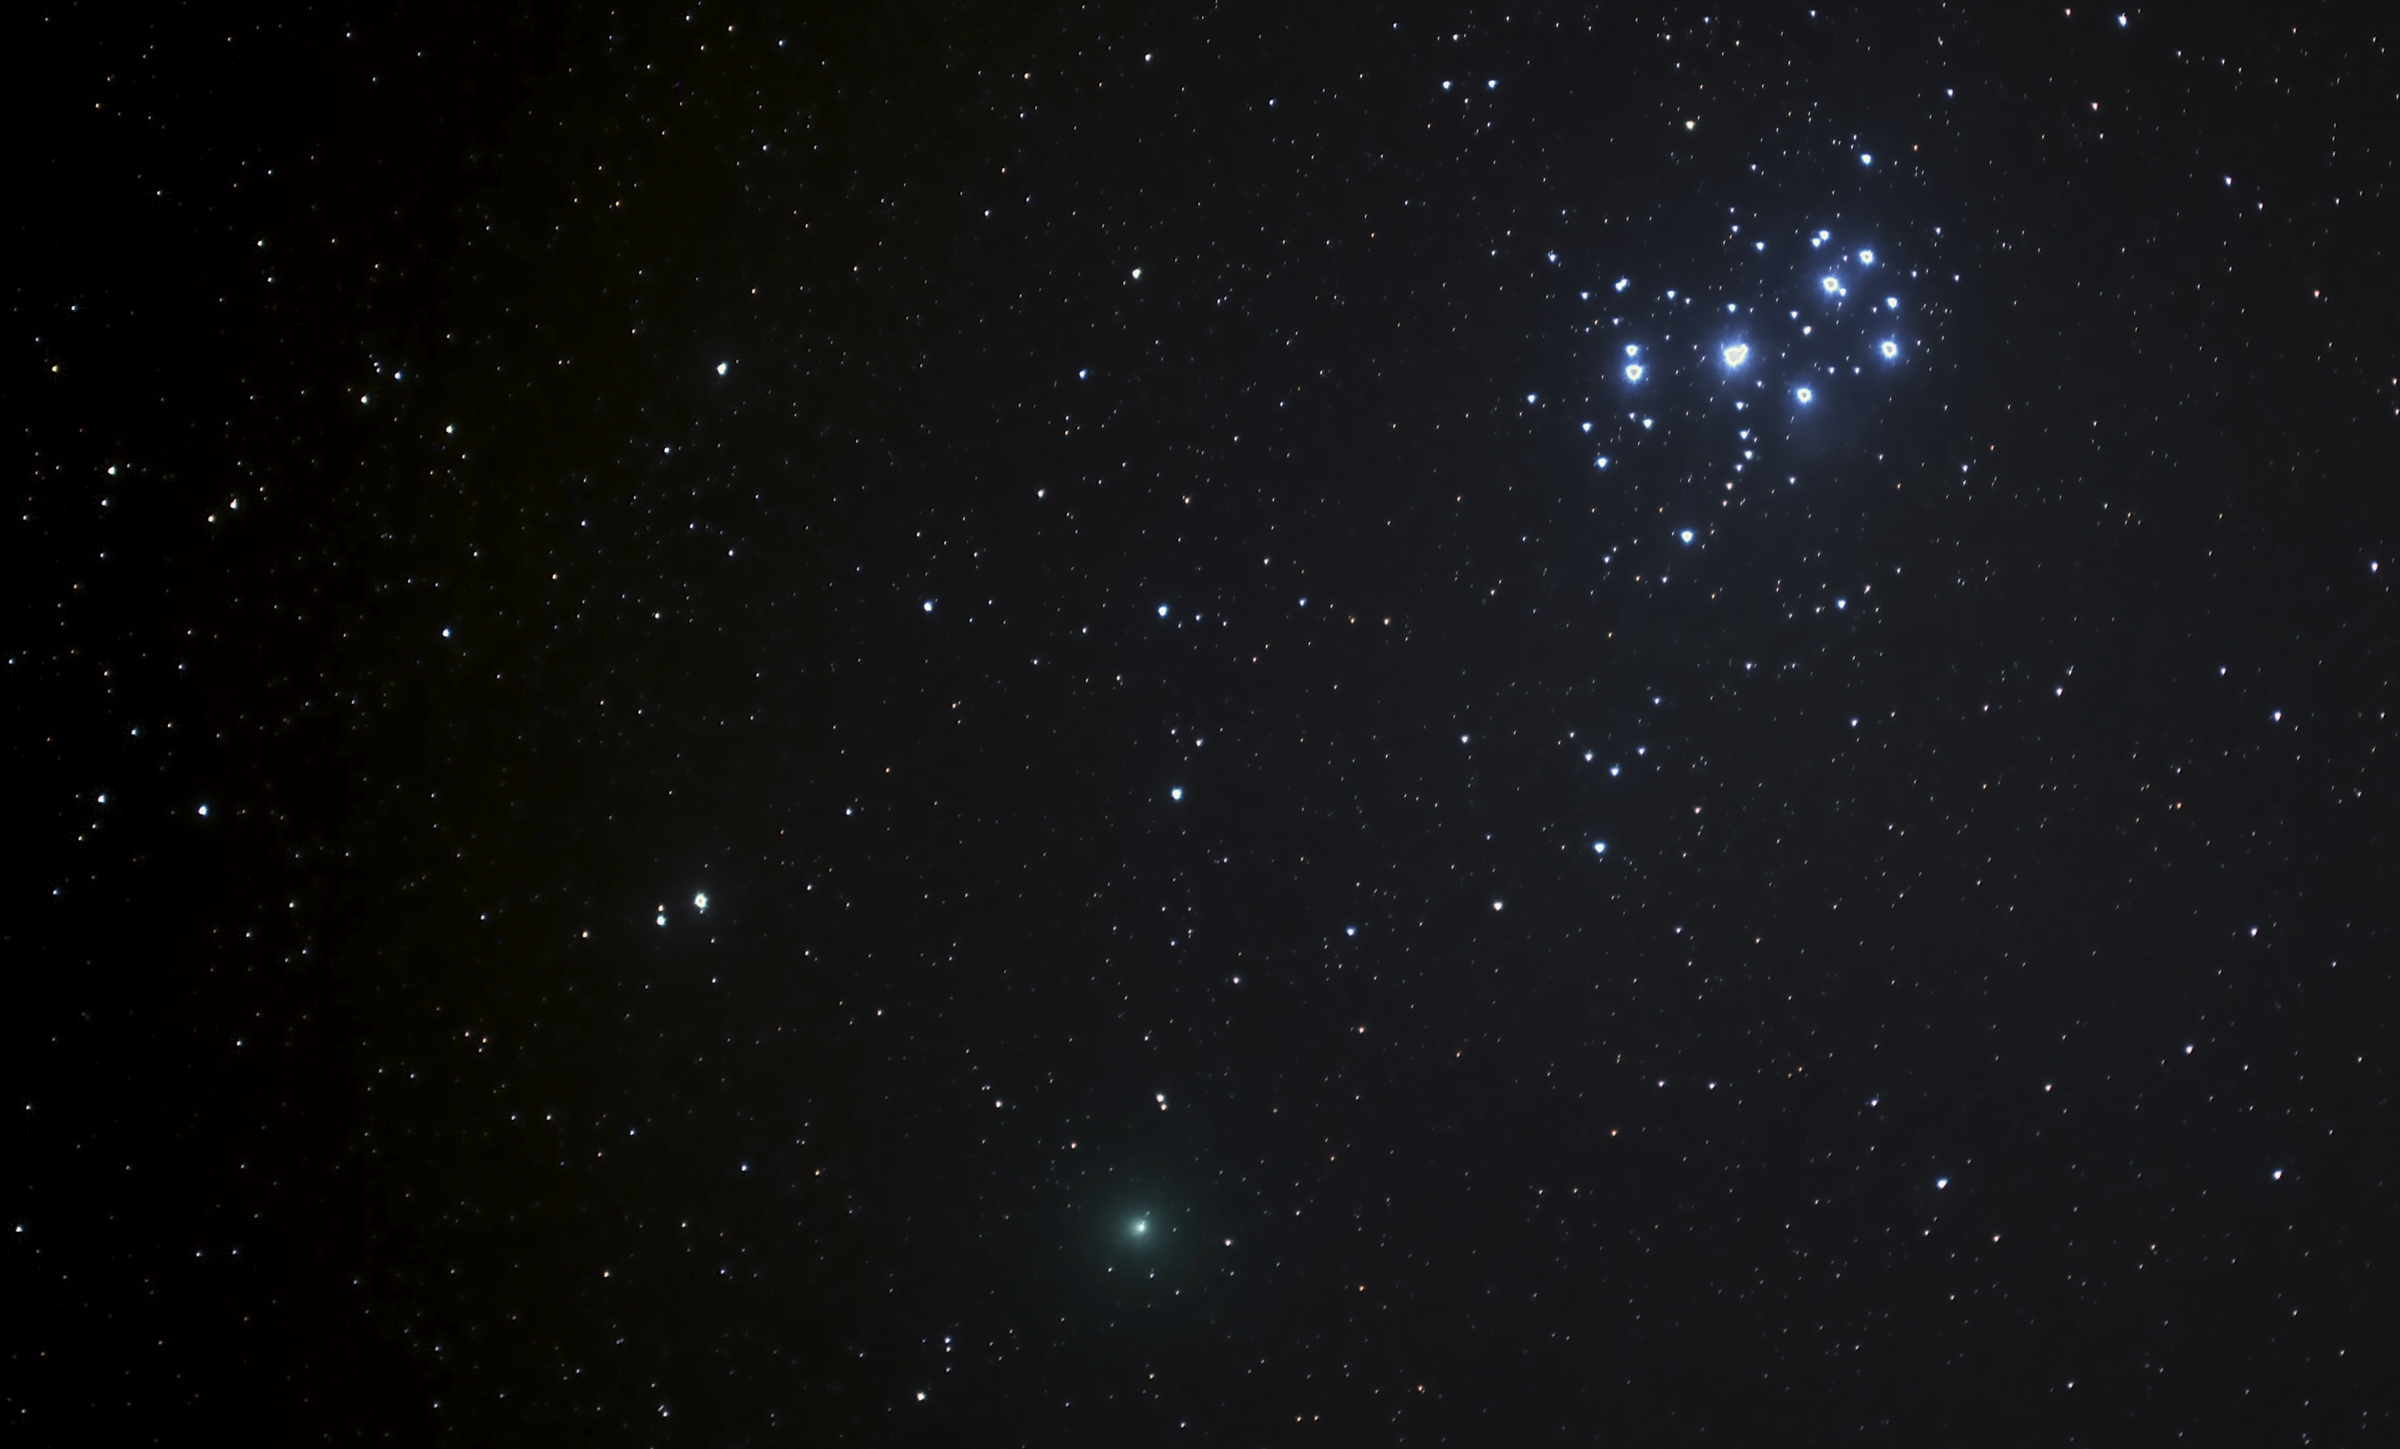 15 Comet meets the Pleiades